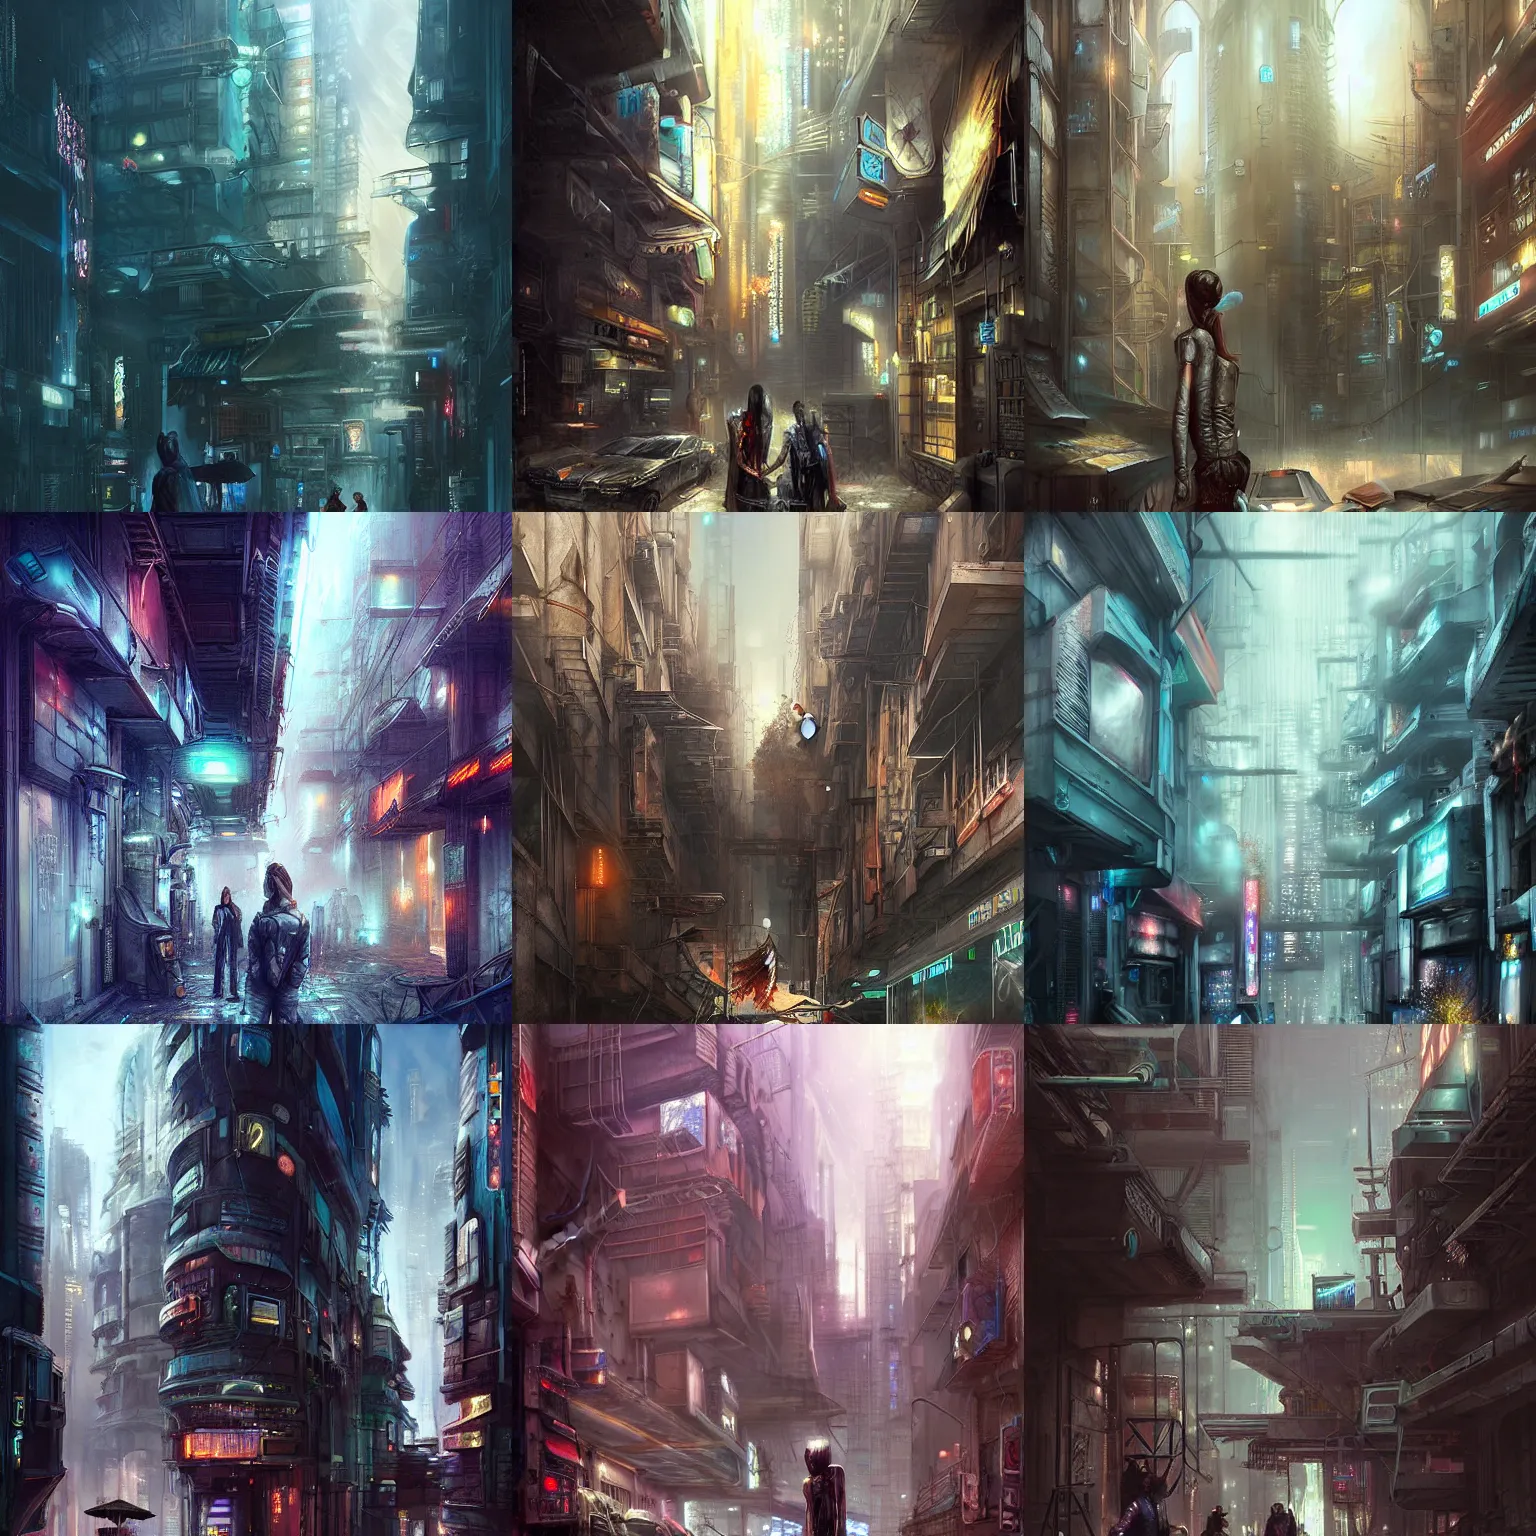 Prompt: a cyberpunk backstreets of a futuristic city by lecouffe - deharme, bastien